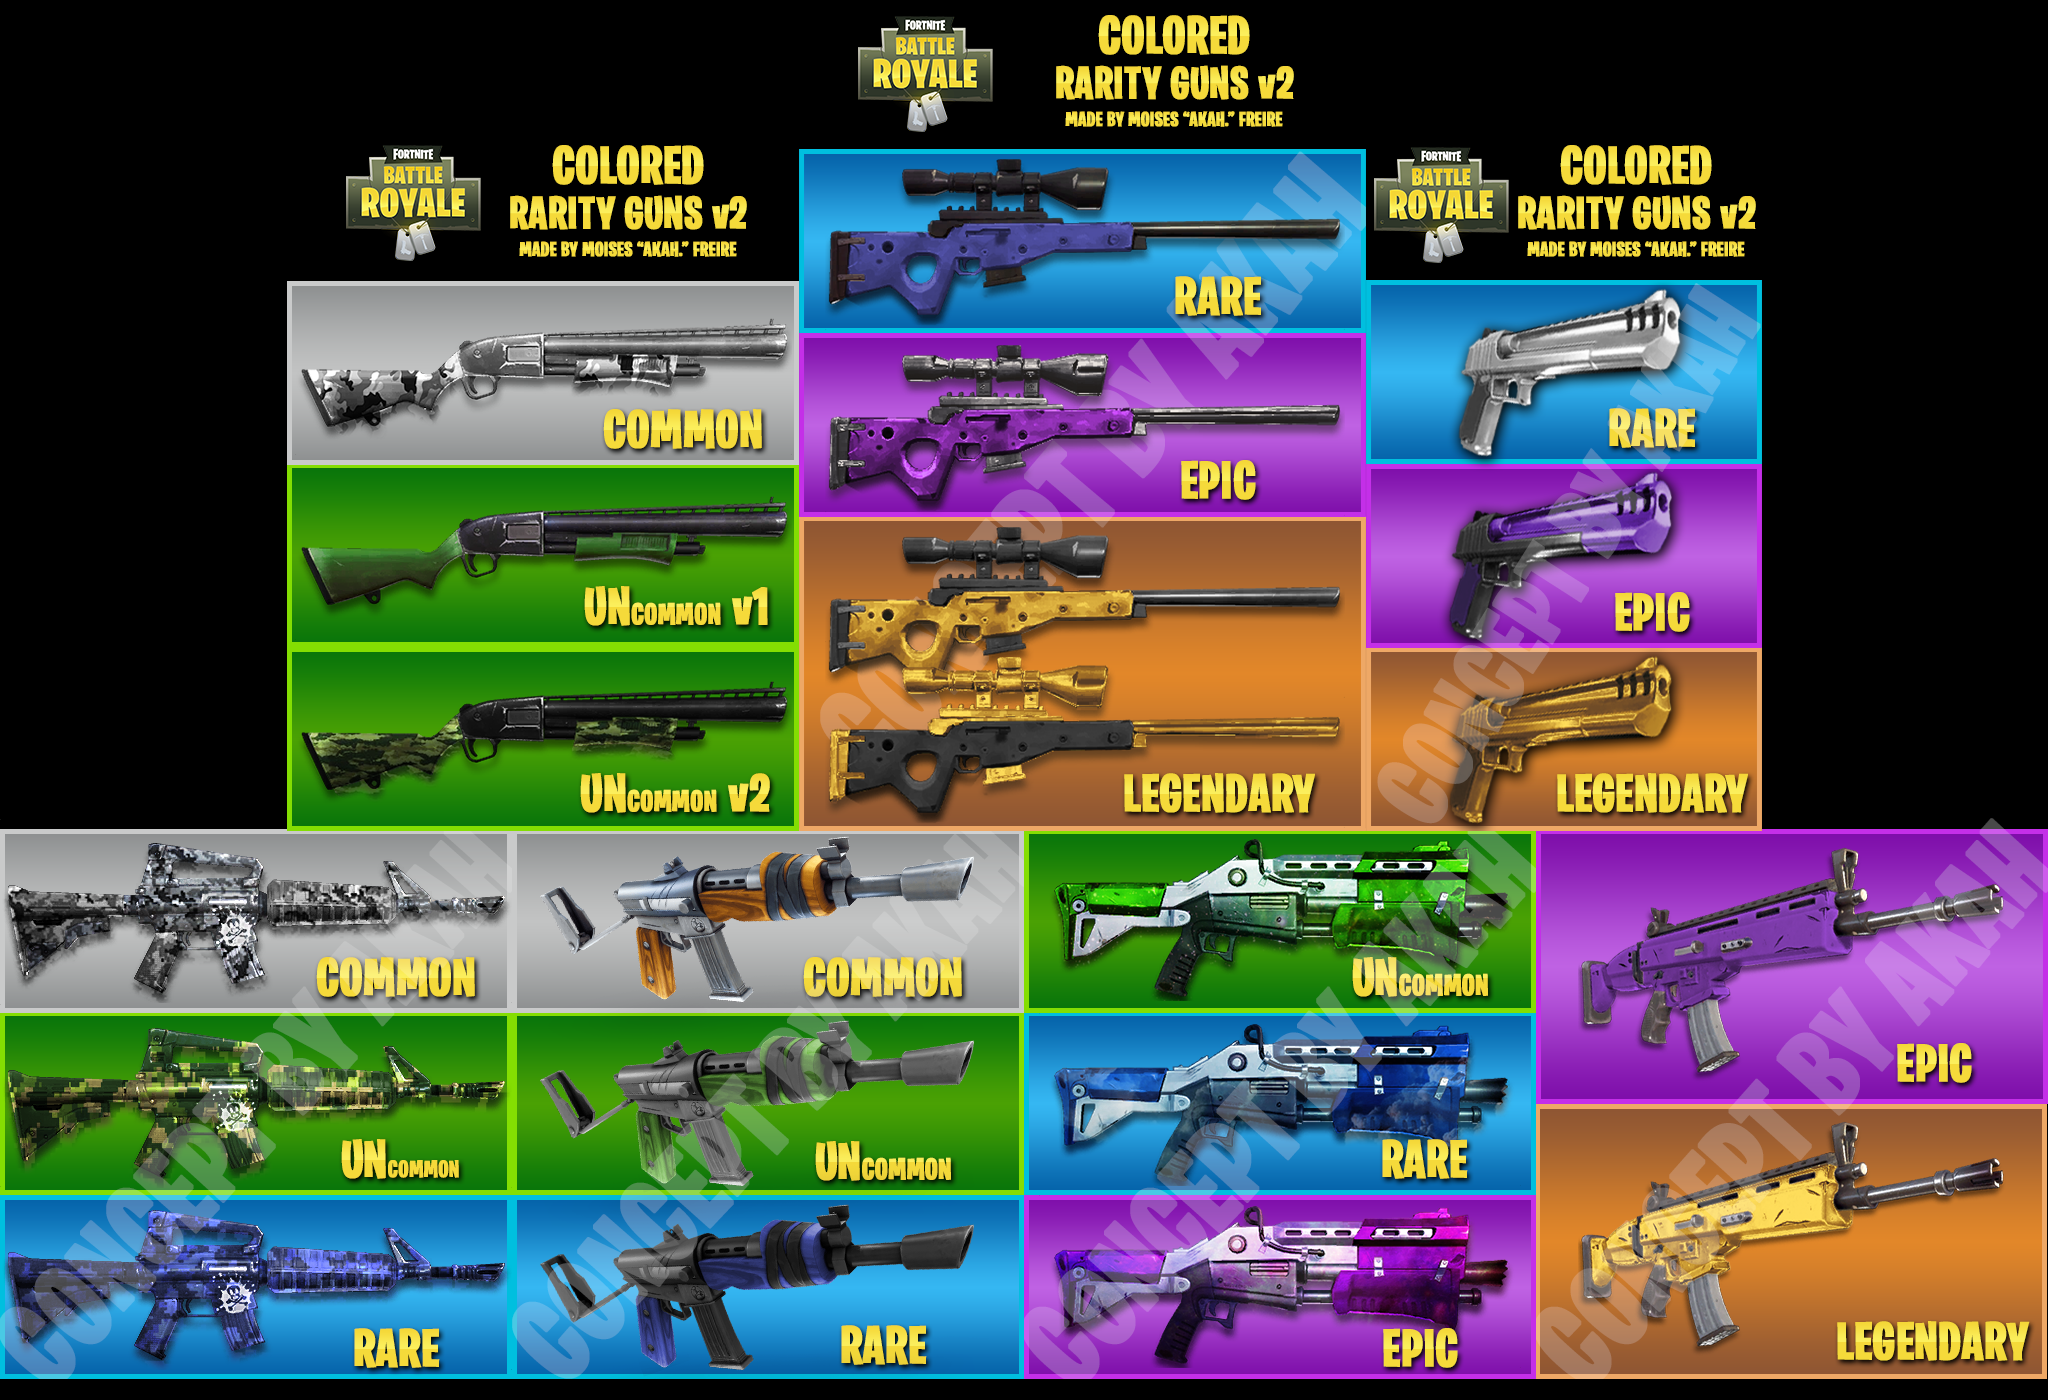 Colored Rarity Guns | Fortnite Insider - 2048 x 1400 png 1729kB